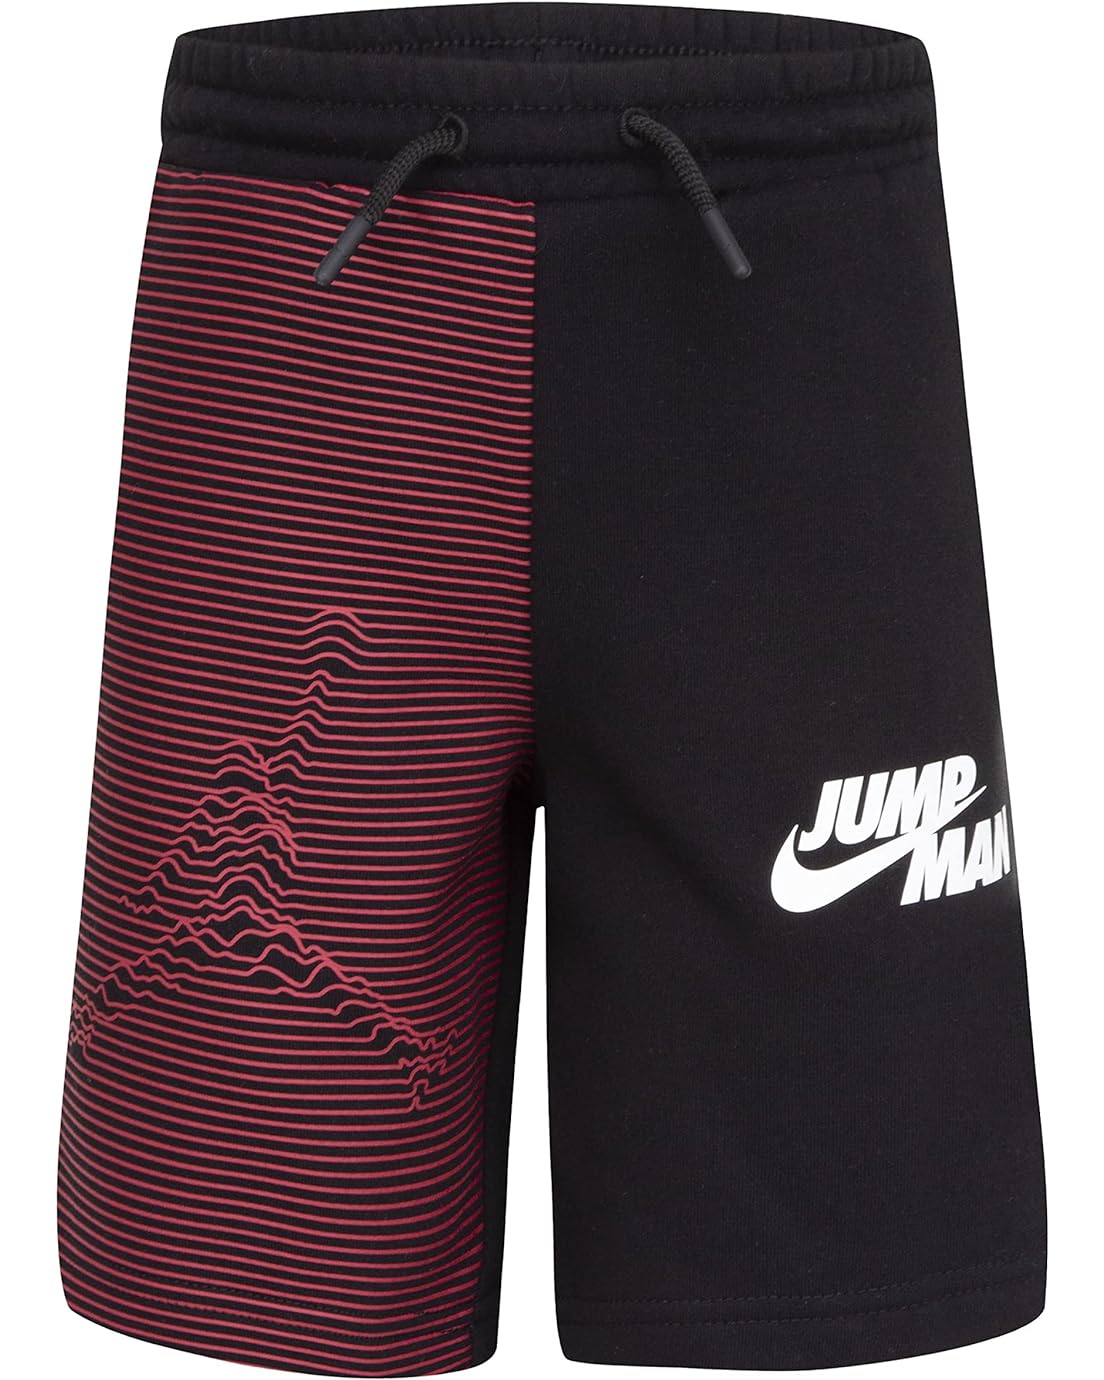  Jordan Kids Jumpman X Nike Fleece Shorts (Toddler/Little Kids/Big Kids)